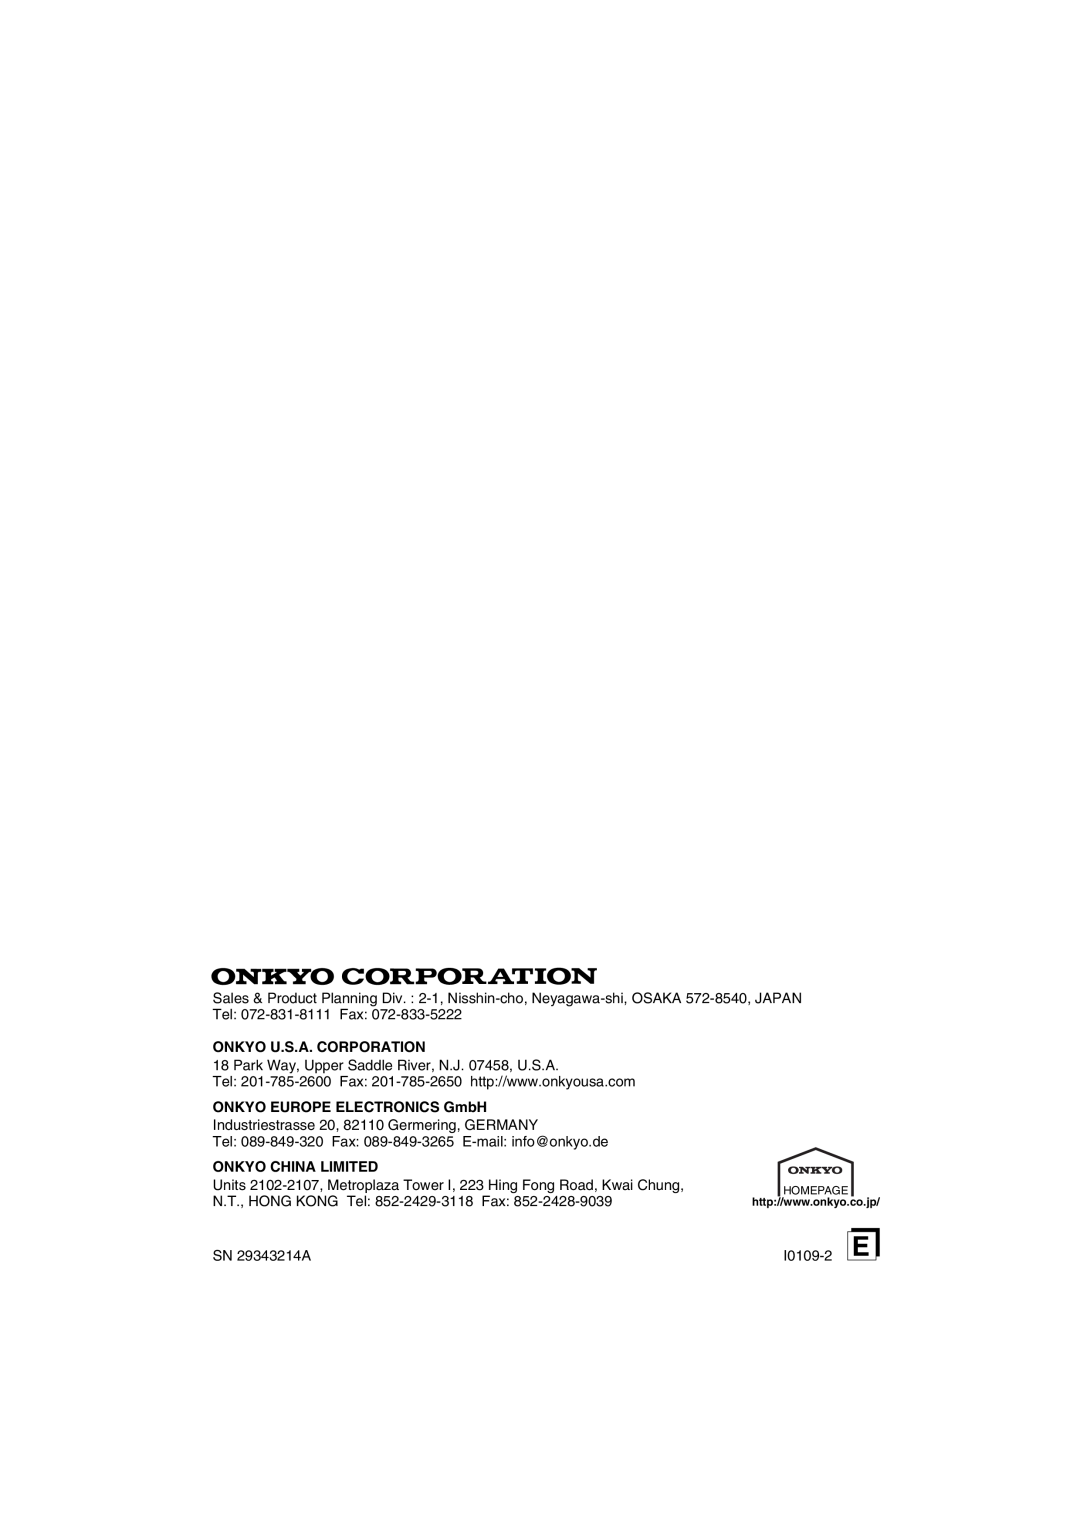 Onkyo R-801A instruction manual Onkyo U.S.A. Corporation, ONKYO EUROPE ELECTRONICS GmbH, Onkyo China Limited 